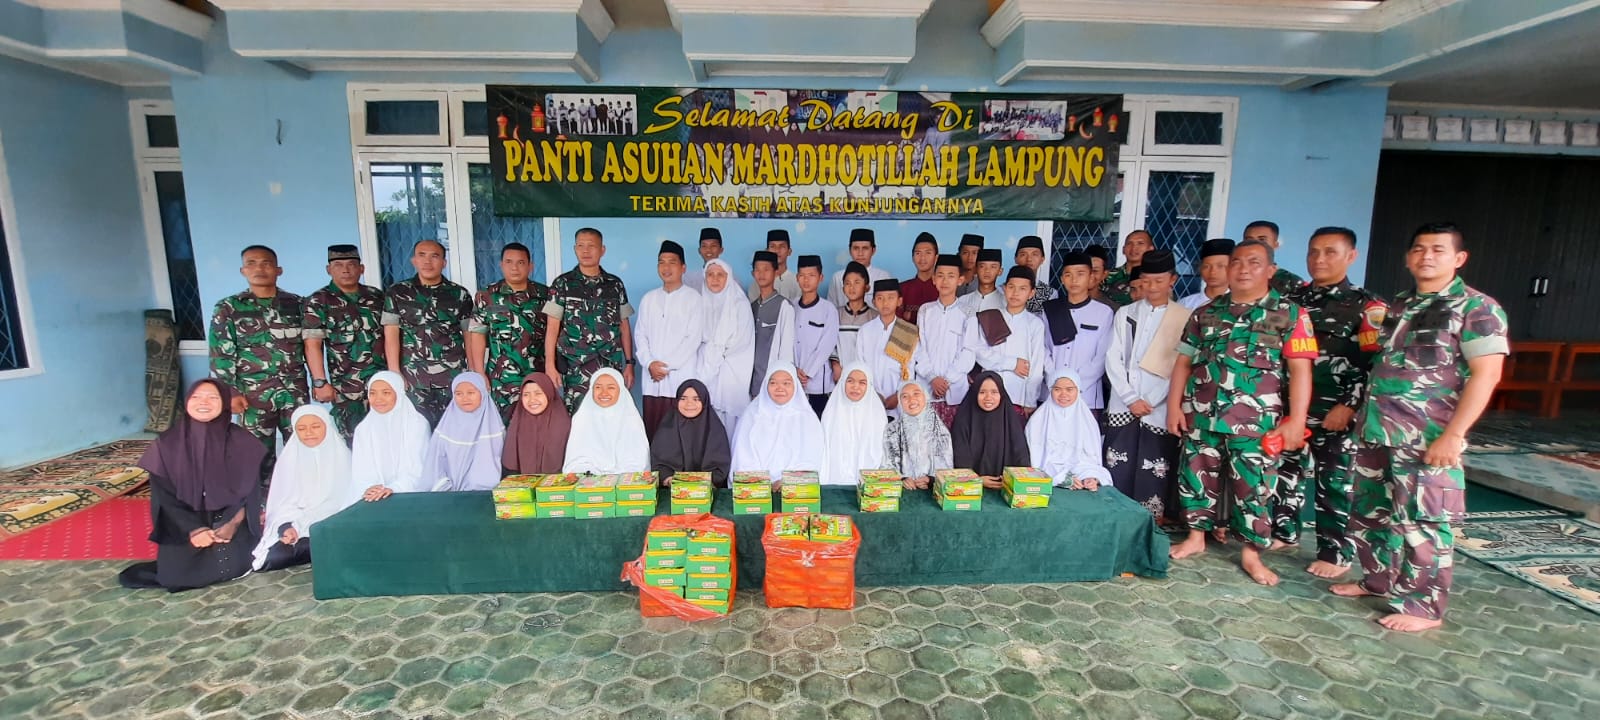 Jum'at Berkah di Bulan Ramadhan, Kodim 0410/Kota Bandar Lampung Berbagi Nasi Kotak Kepada Panti Asuhan Mardhotillah